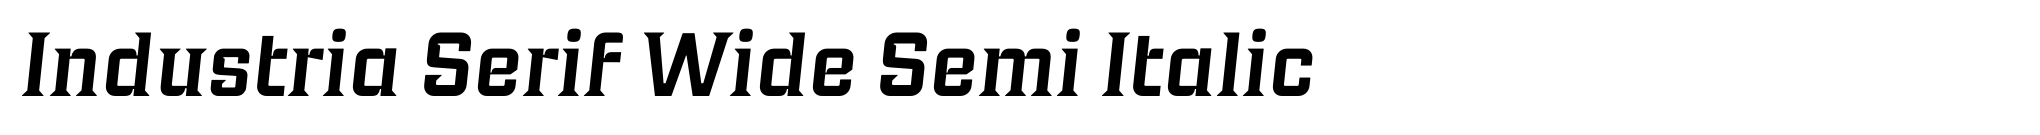 Industria Serif Wide Semi Italic image